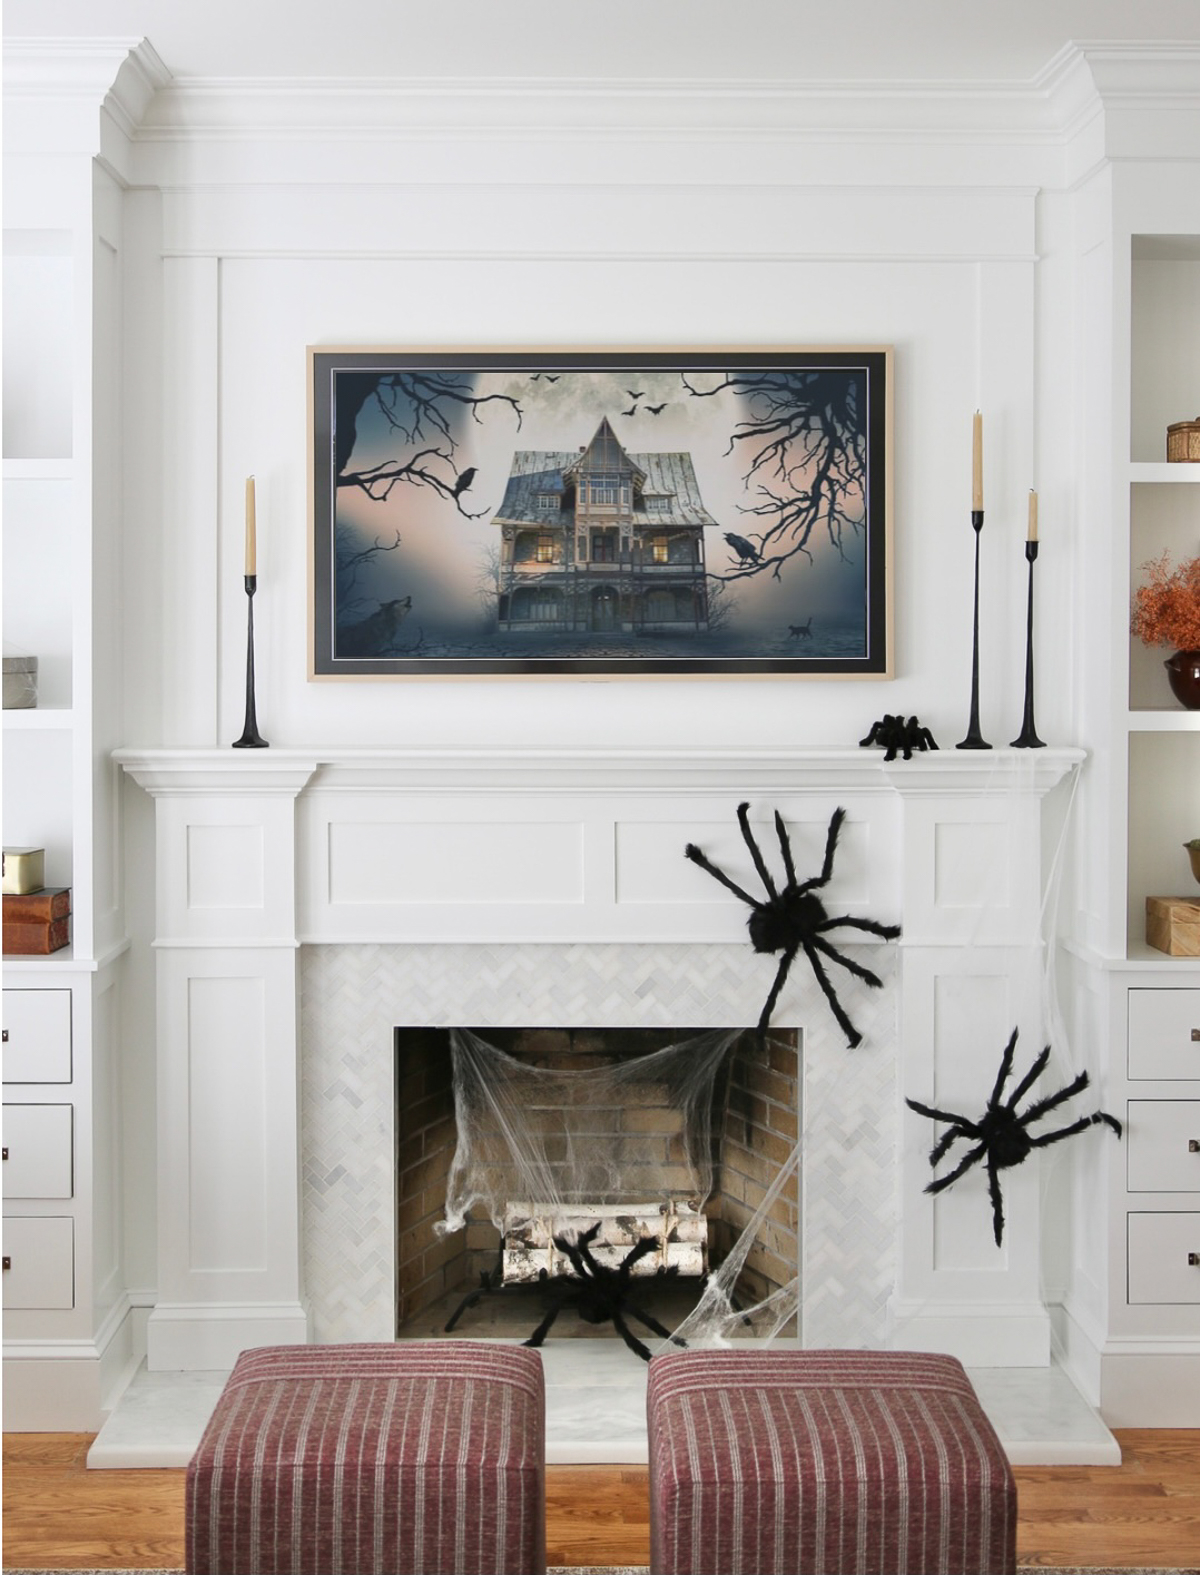 Halloween decor on fireplace with spooky house art on frame tv